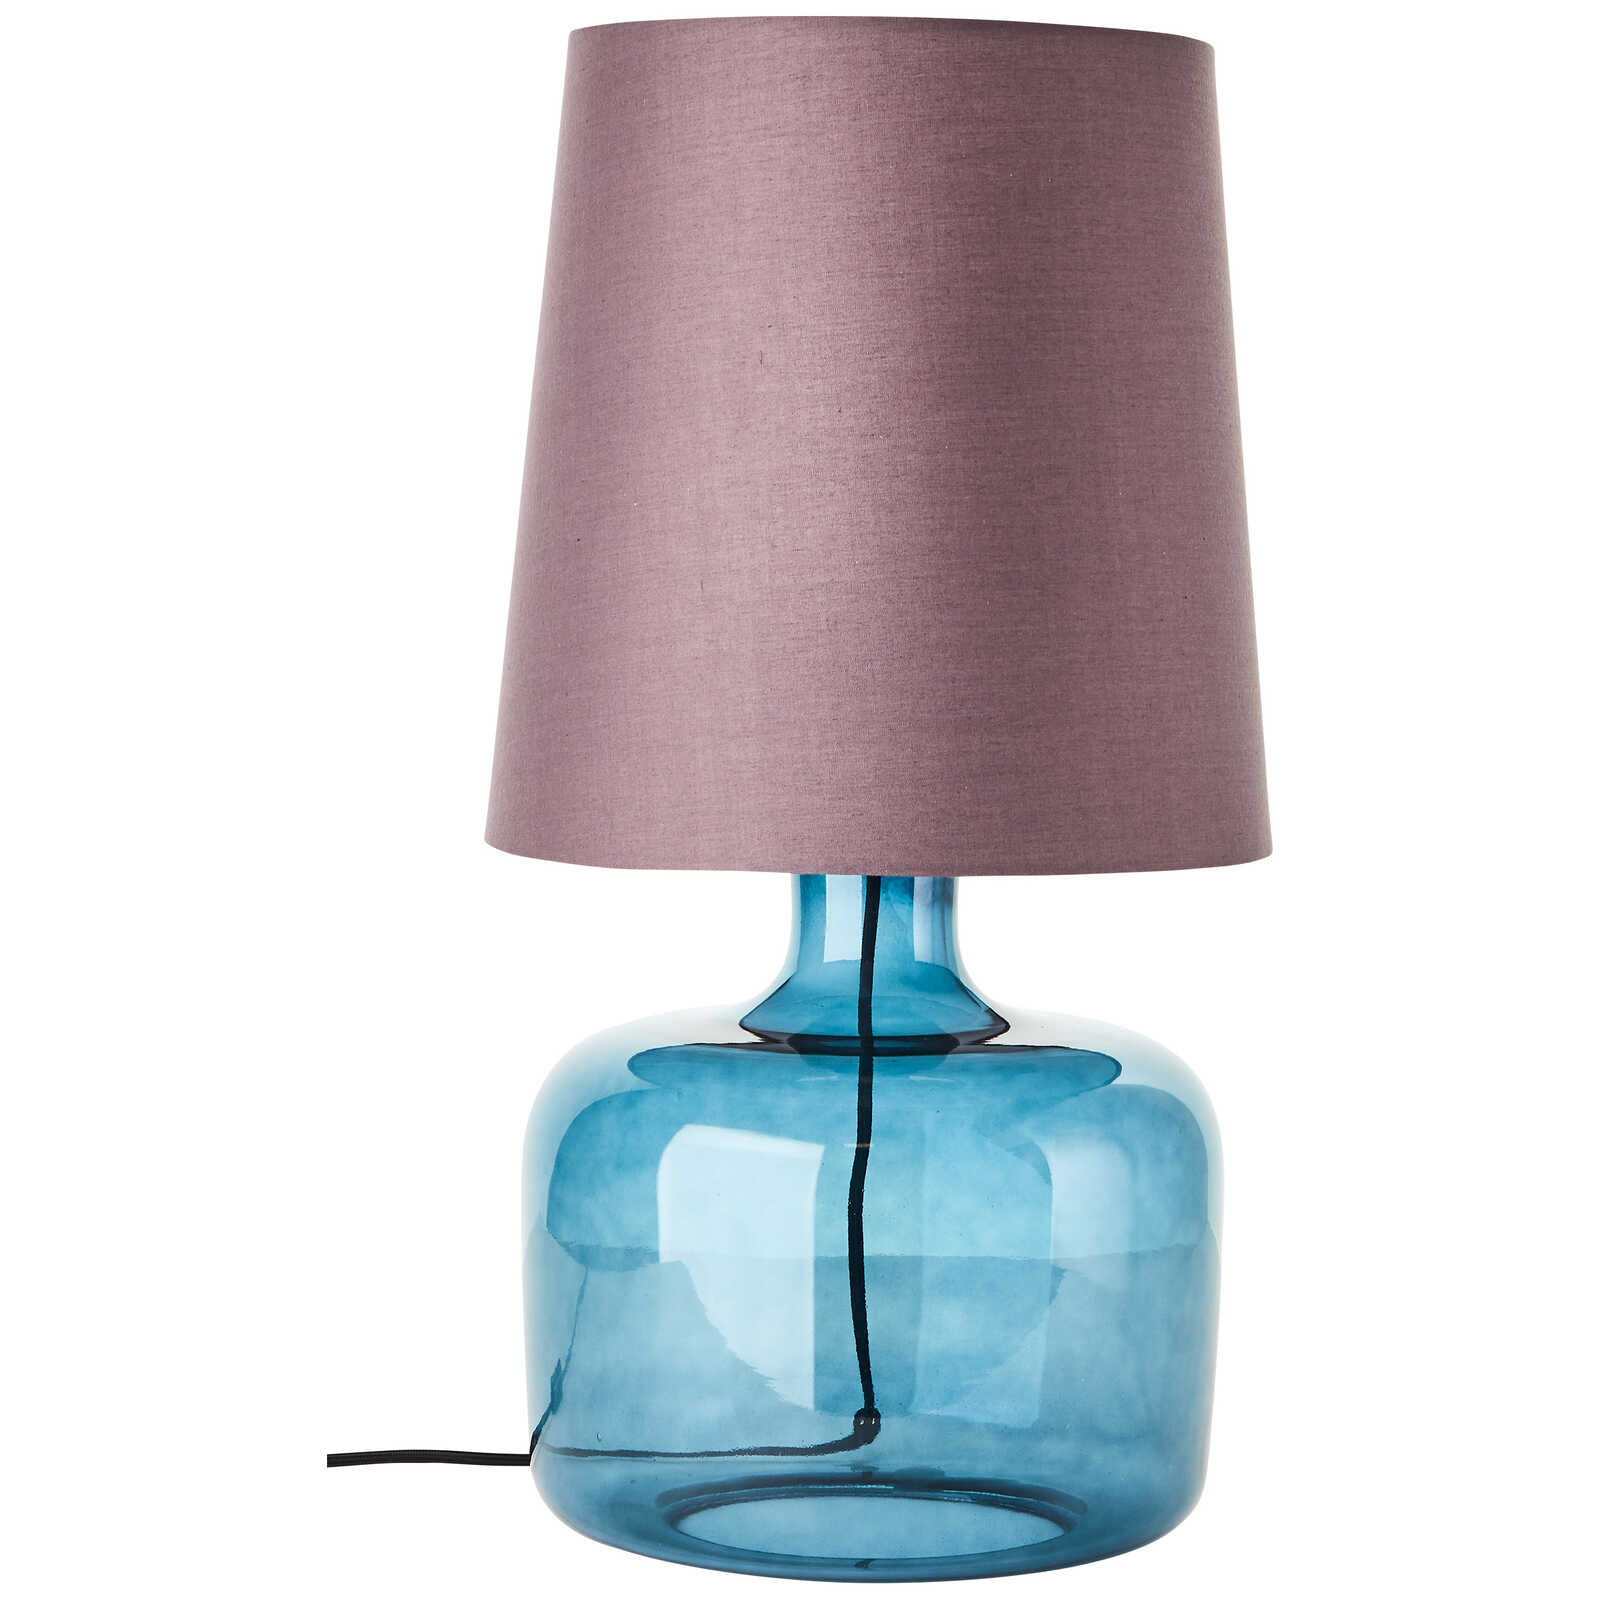             Textile table lamp - Jana 3 - Blue
        